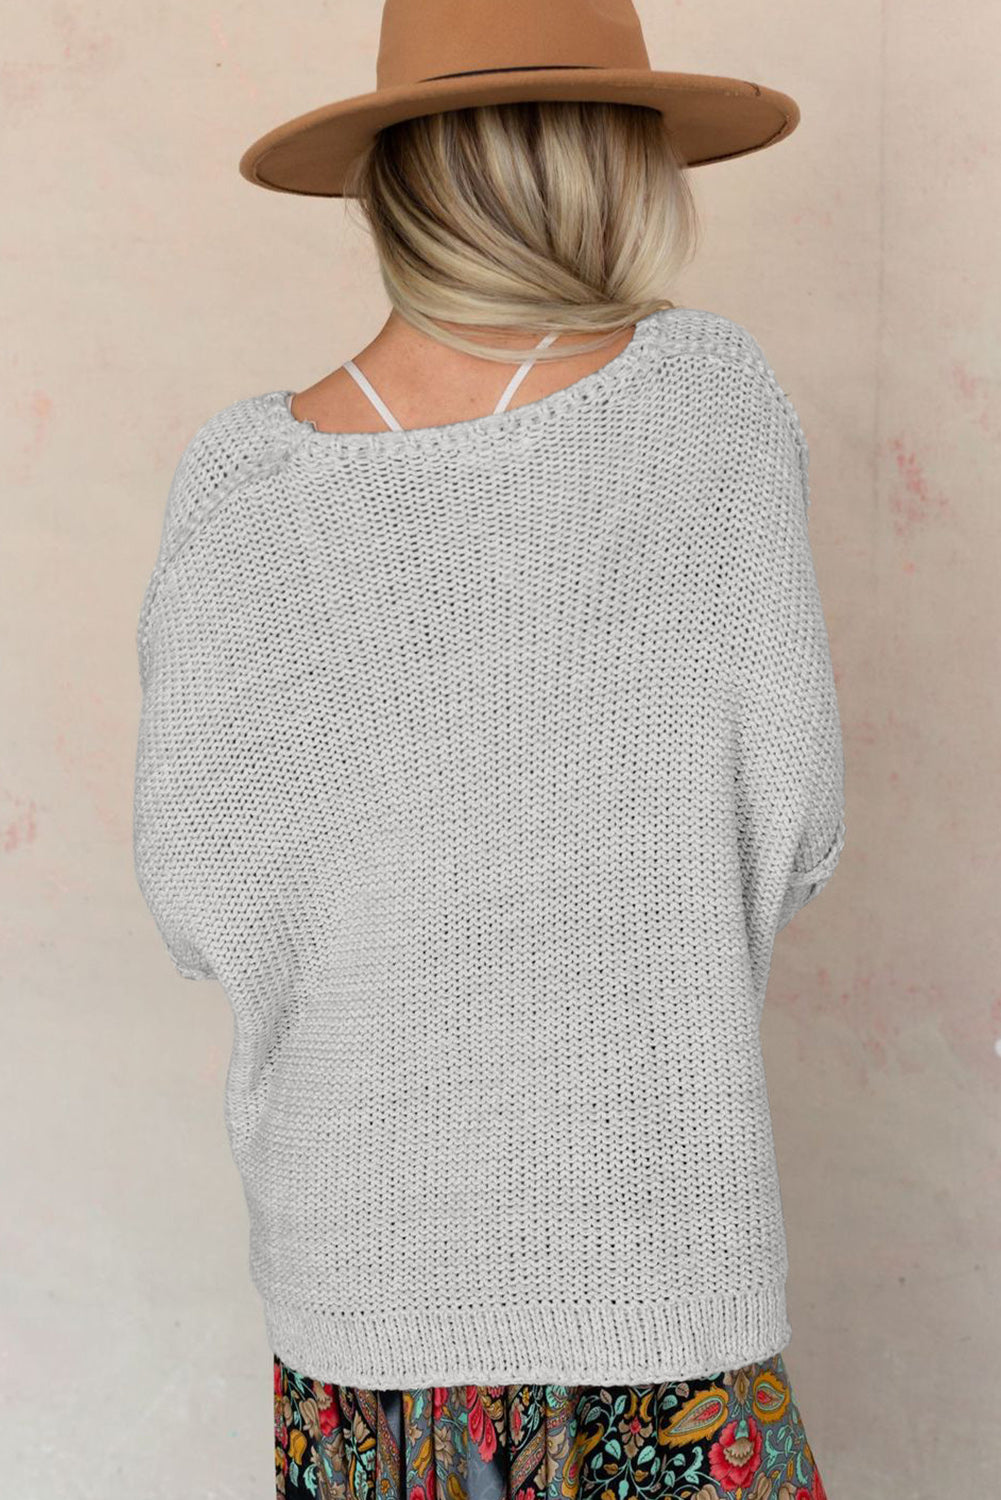 Bež ohlapen pleten pulover s slouchy teksturo